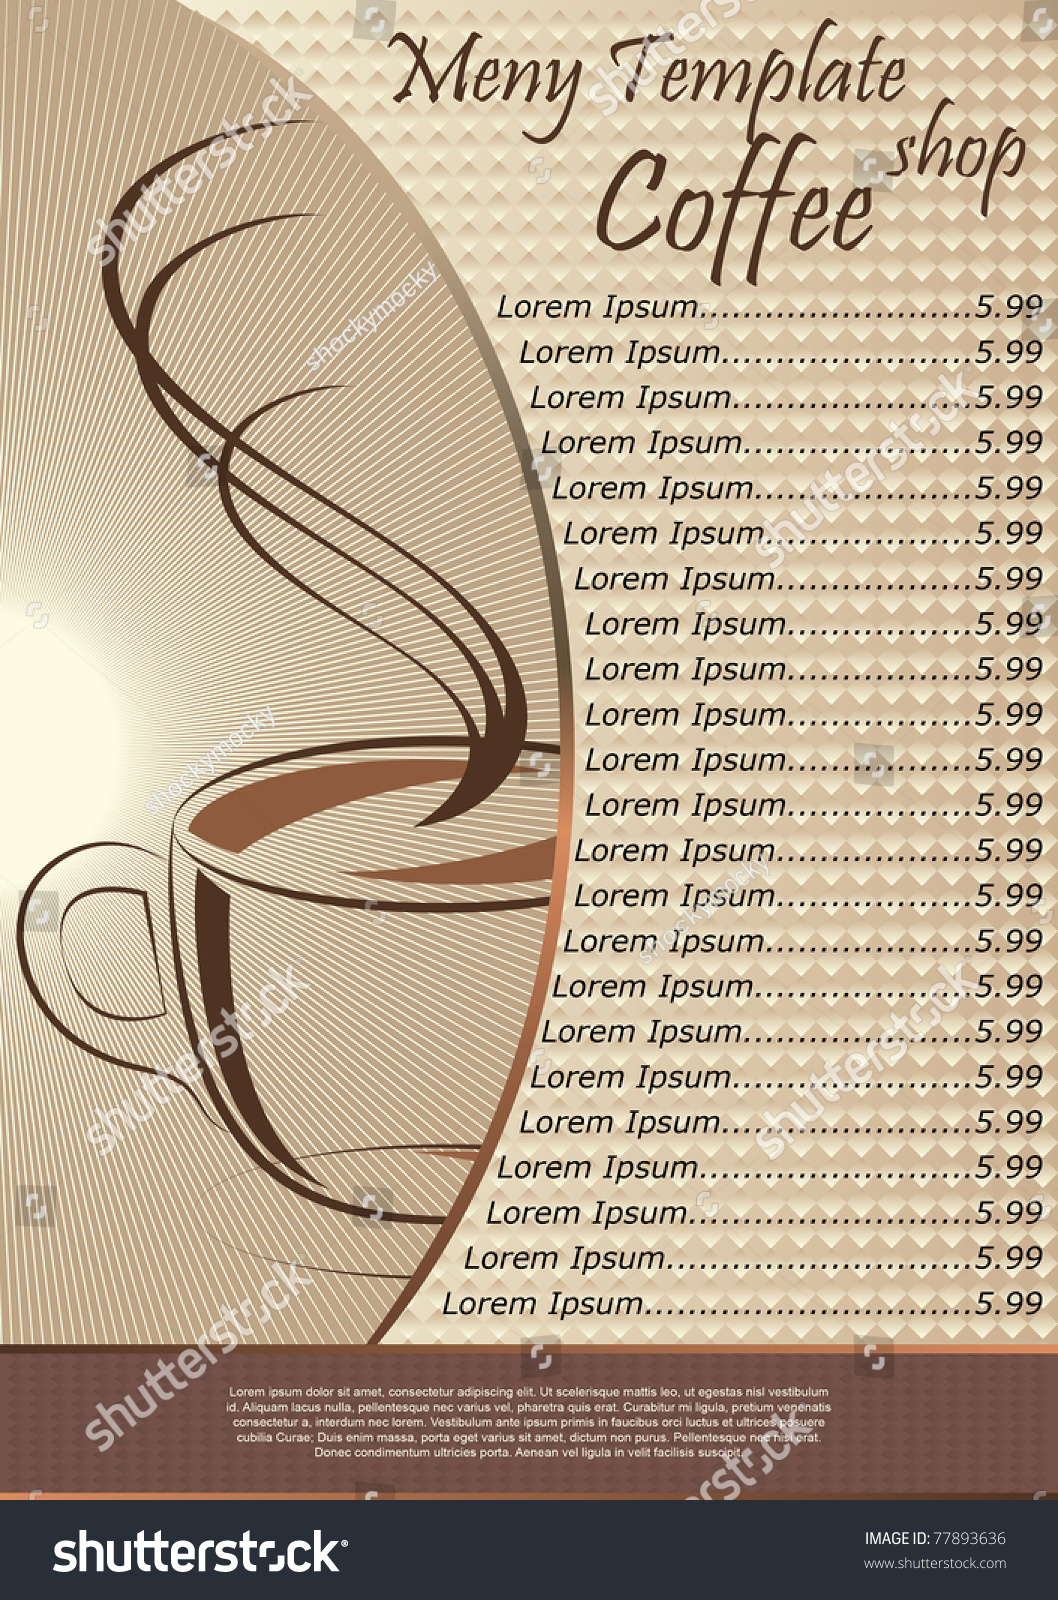 coffee-shop-menu-template-vector-illustration-77893636-shutterstock